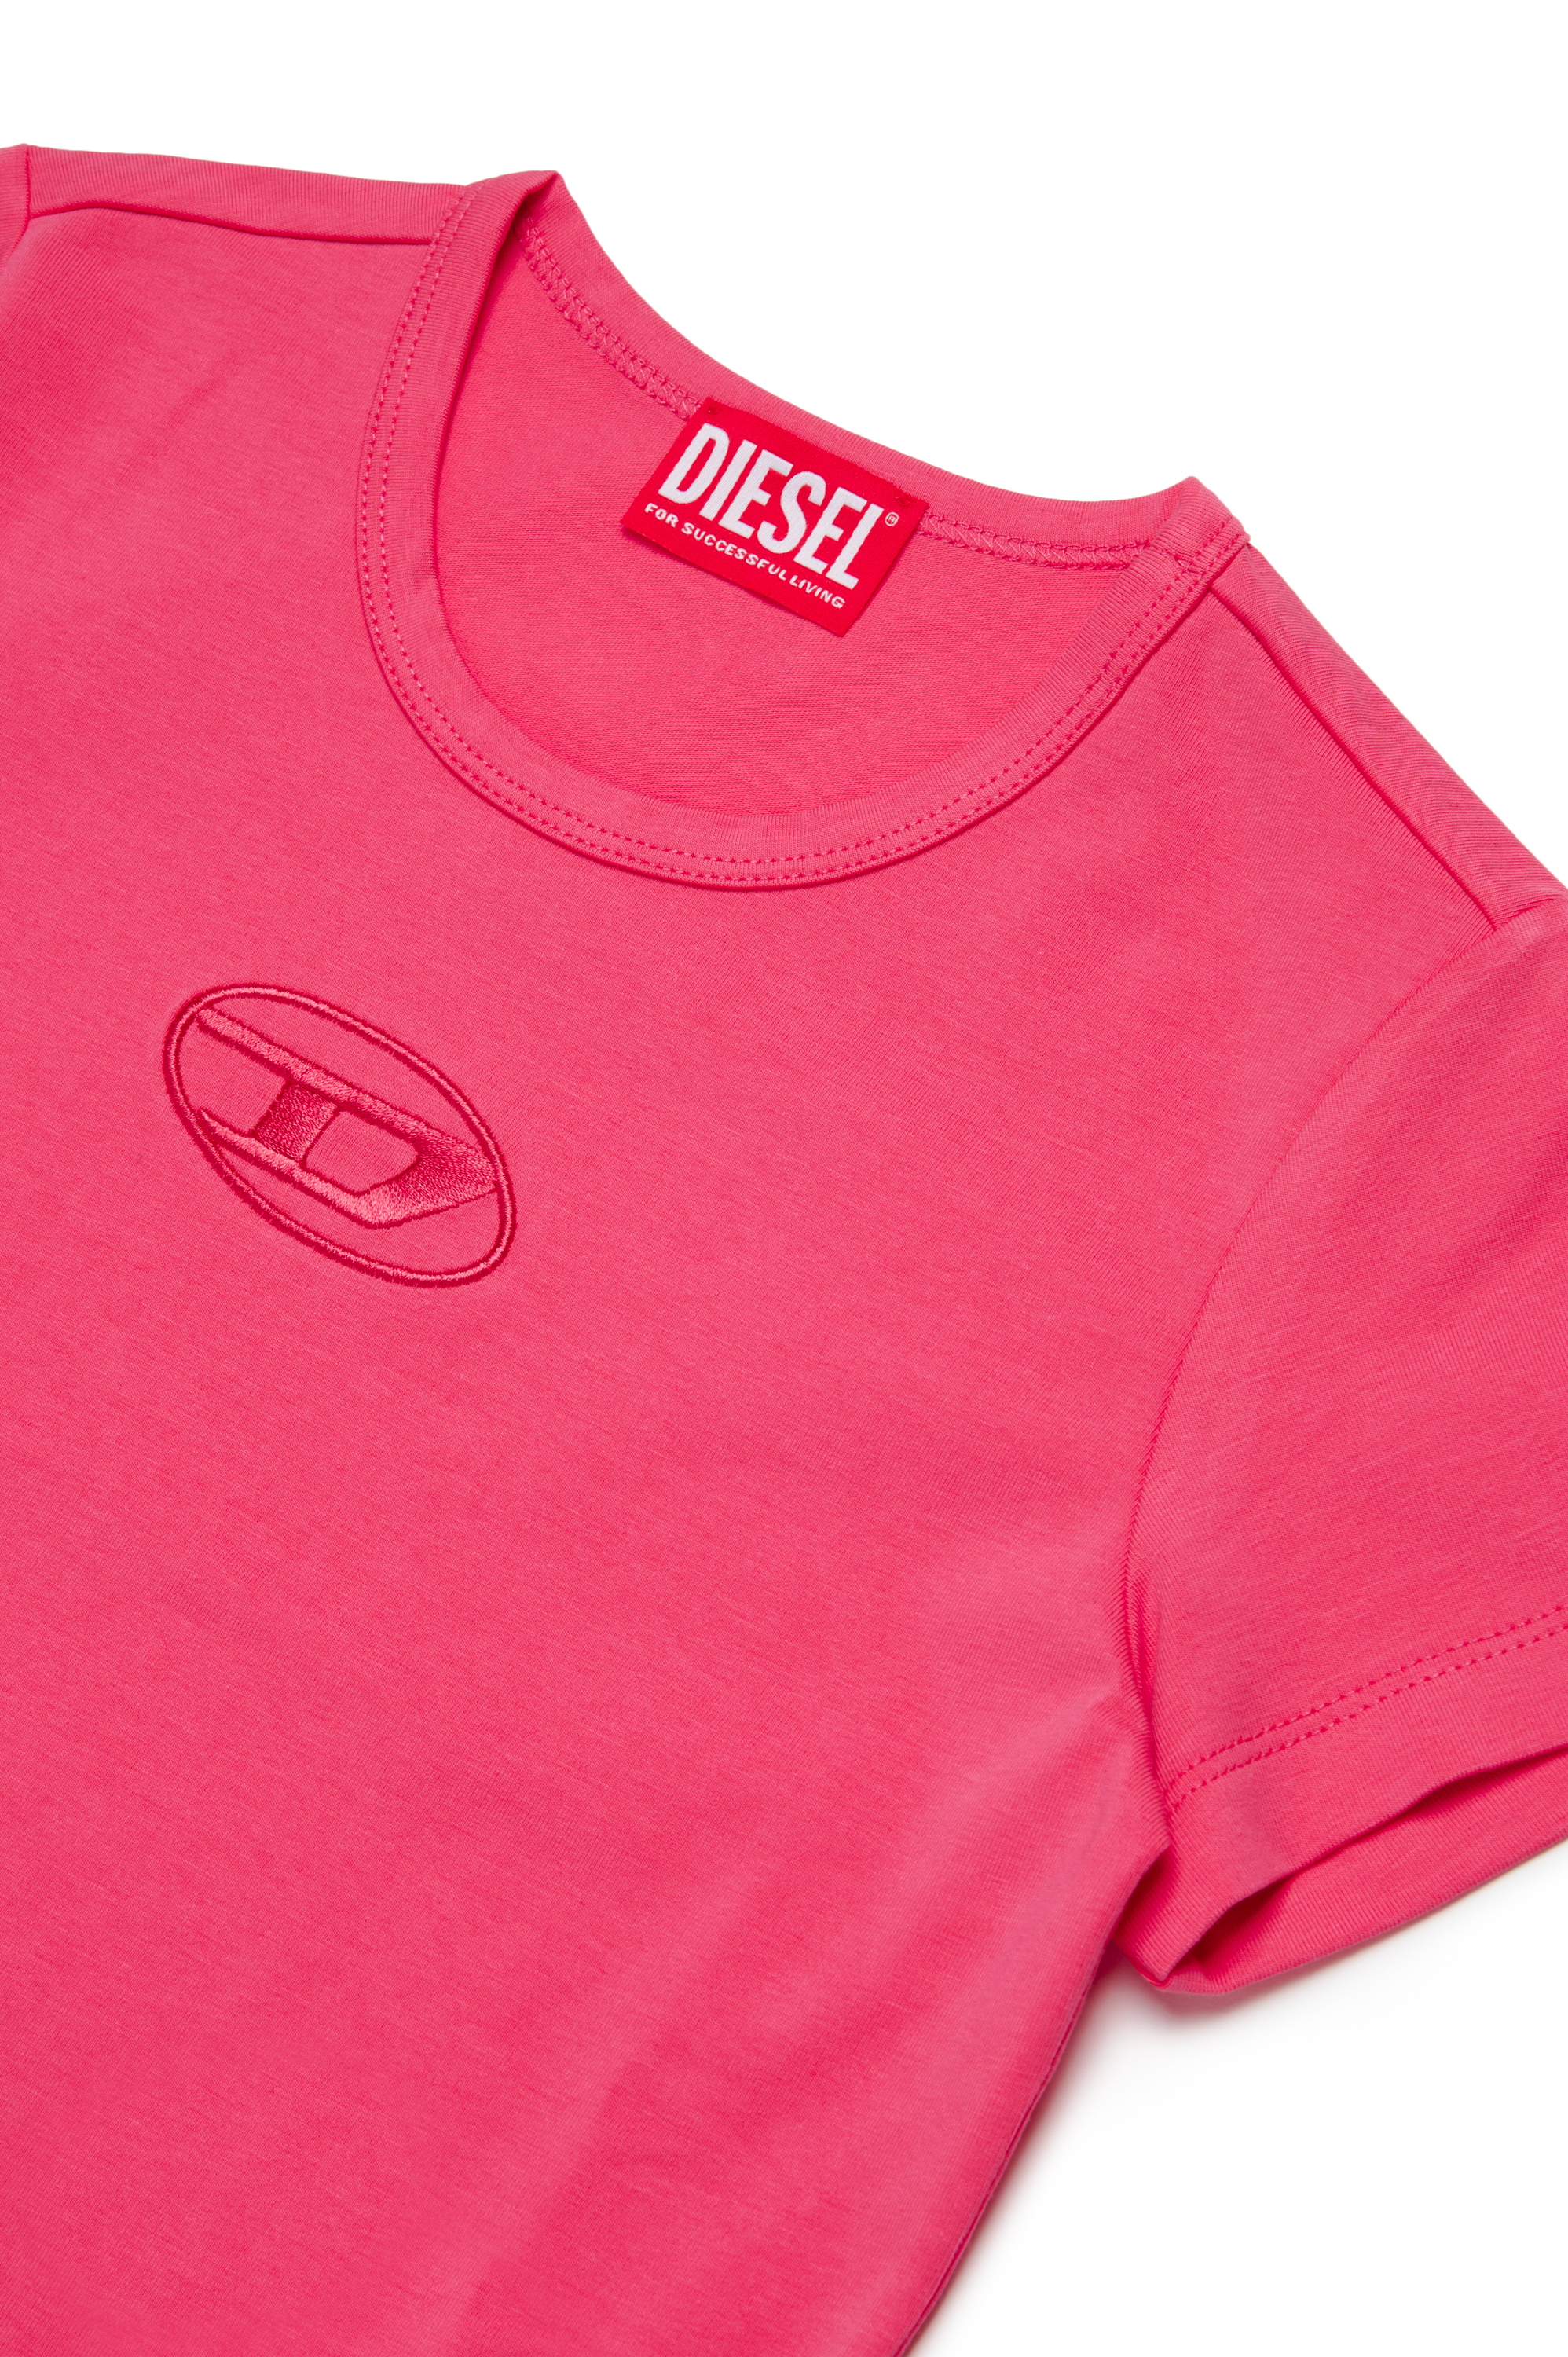 Diesel - TANGIEX, Femme T-shirt avec broderie Oval D ton sur ton in Rose - Image 3